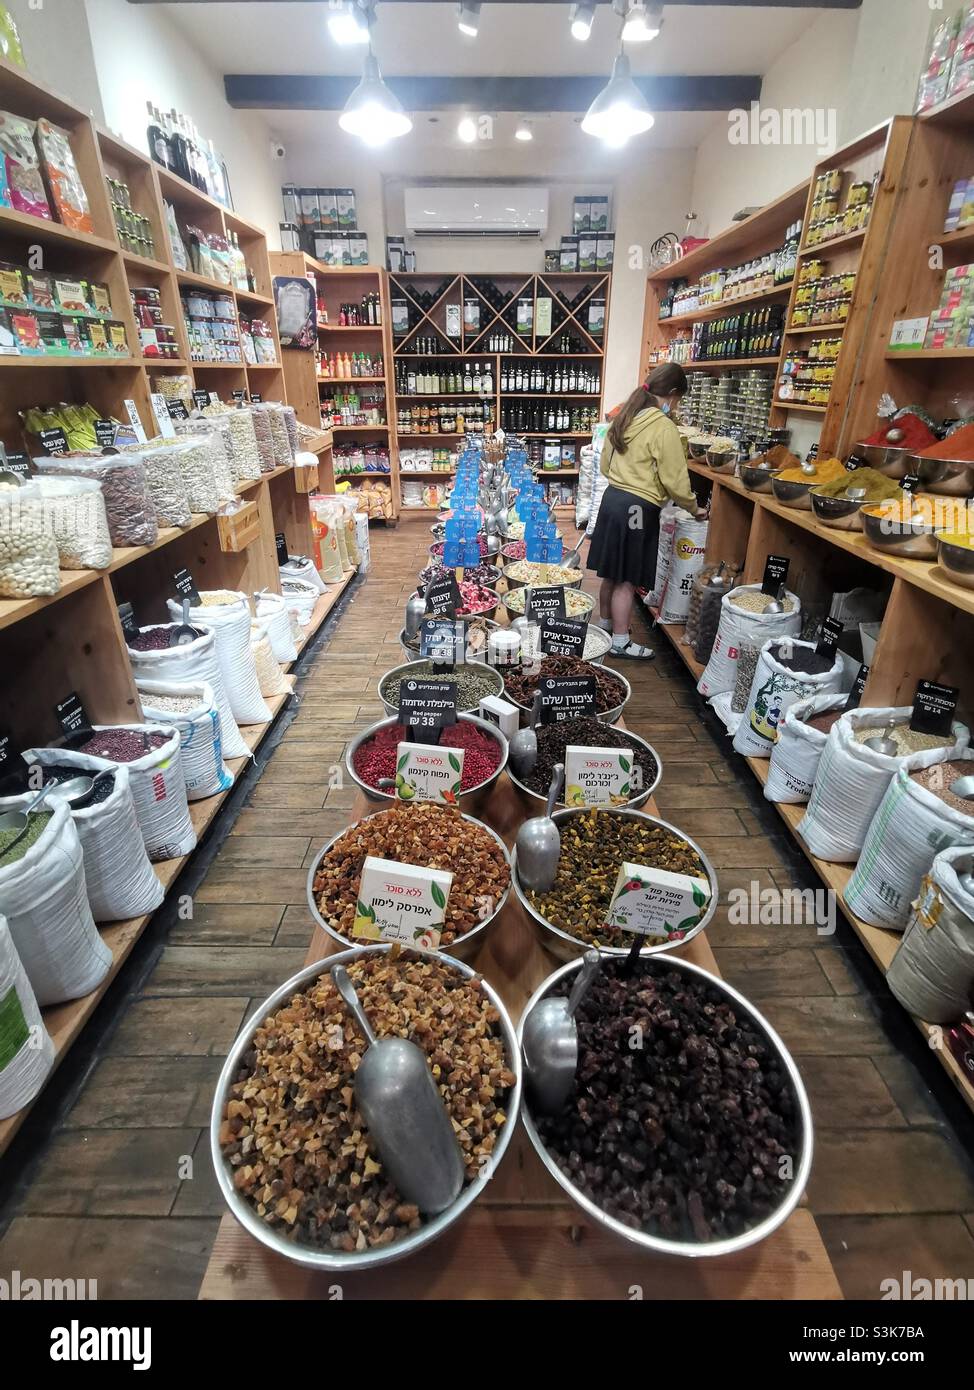 Spezie Assortite Su Un Mercato a Gerusalemme Stall Bazaar Israel Fotografia  Stock - Immagine di colore, ingrediente: 231592892